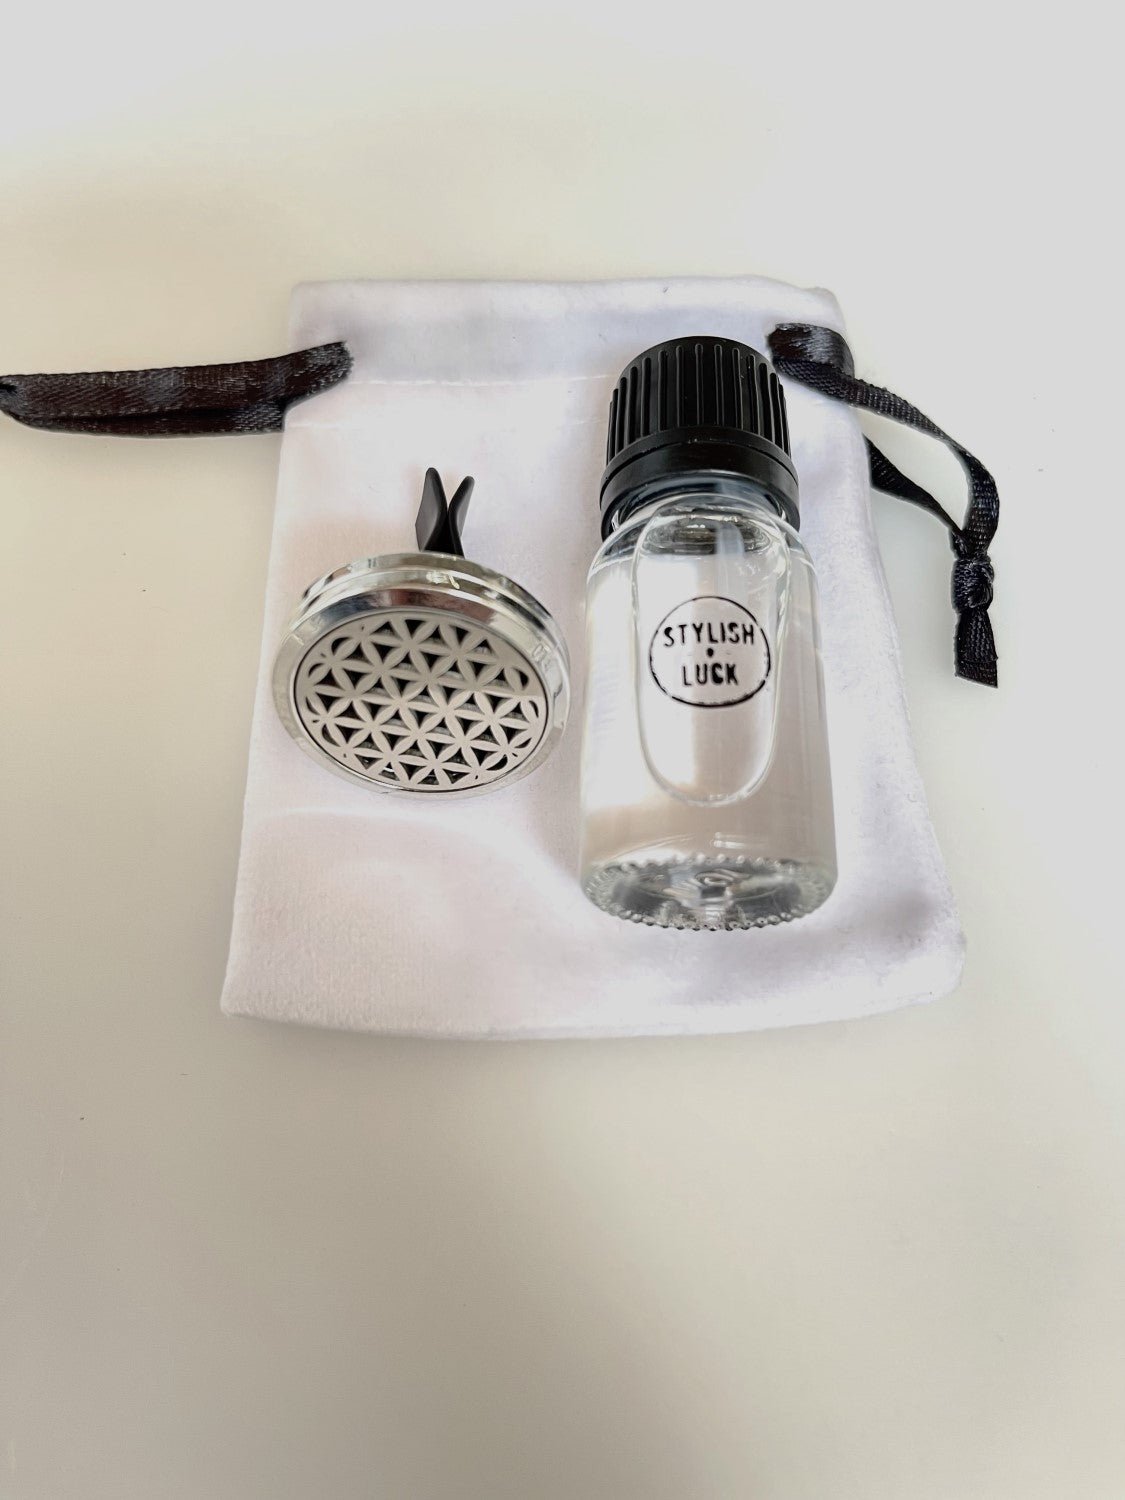 Flower aromatherapy Car Perfume Diffuser - Stylish Luck Home Decor | Hamsa \ Hand Of Fatima | Good Luck Gifts